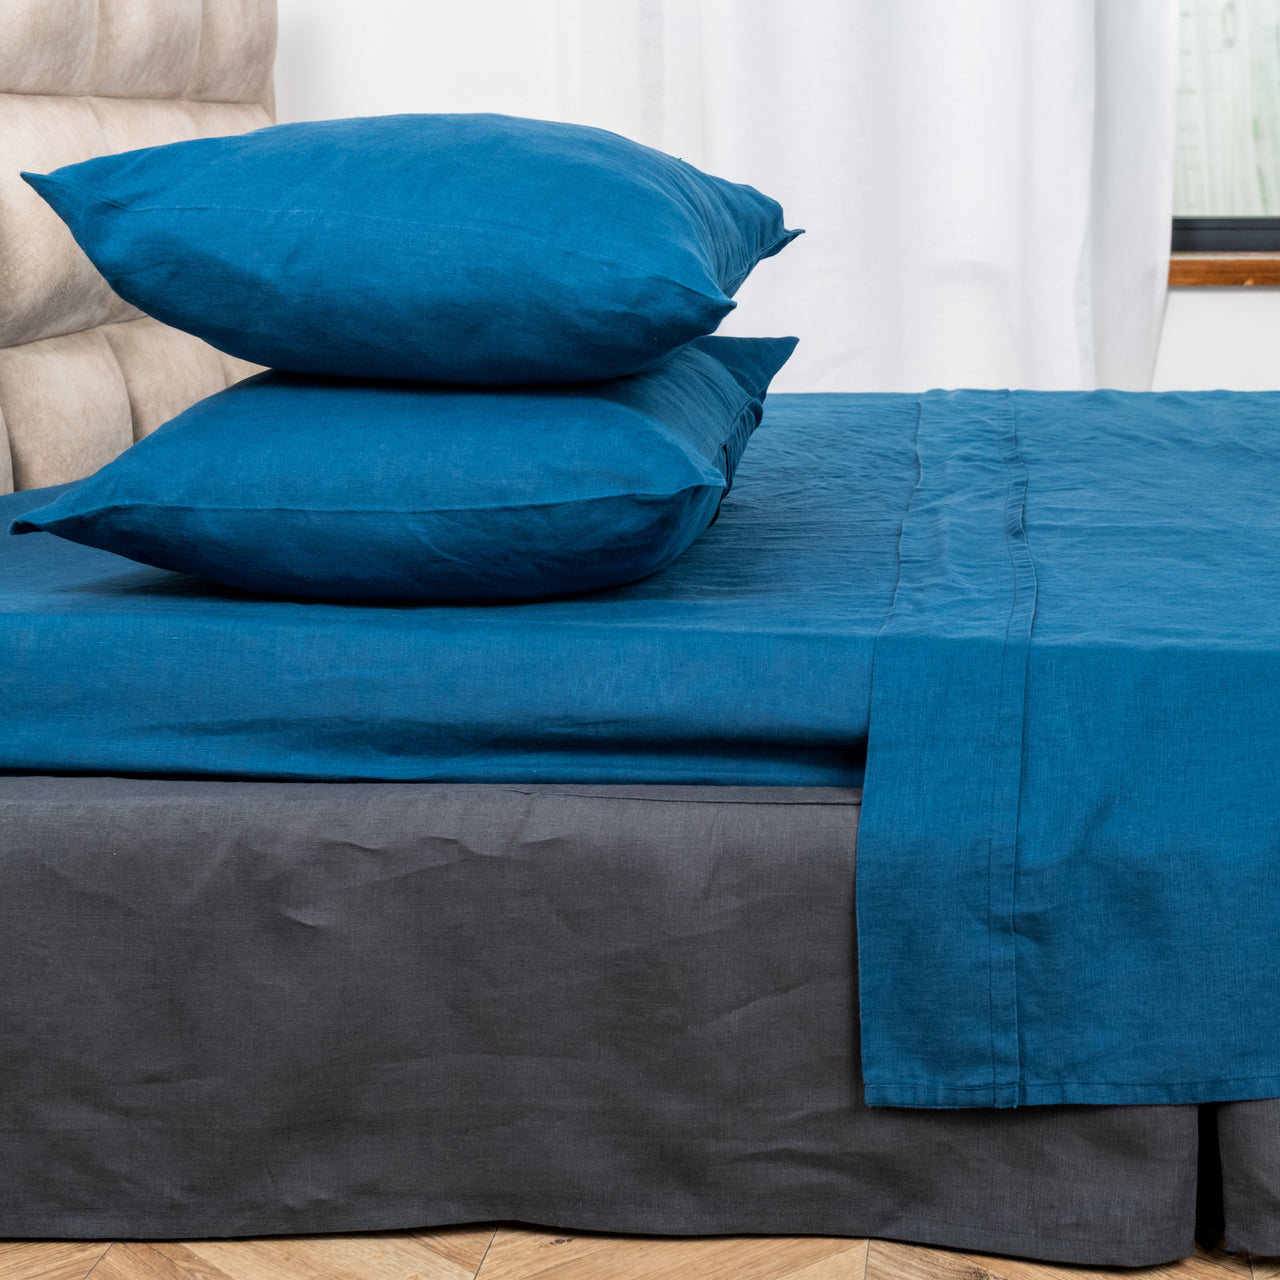 Blue Linen Bed Sheets